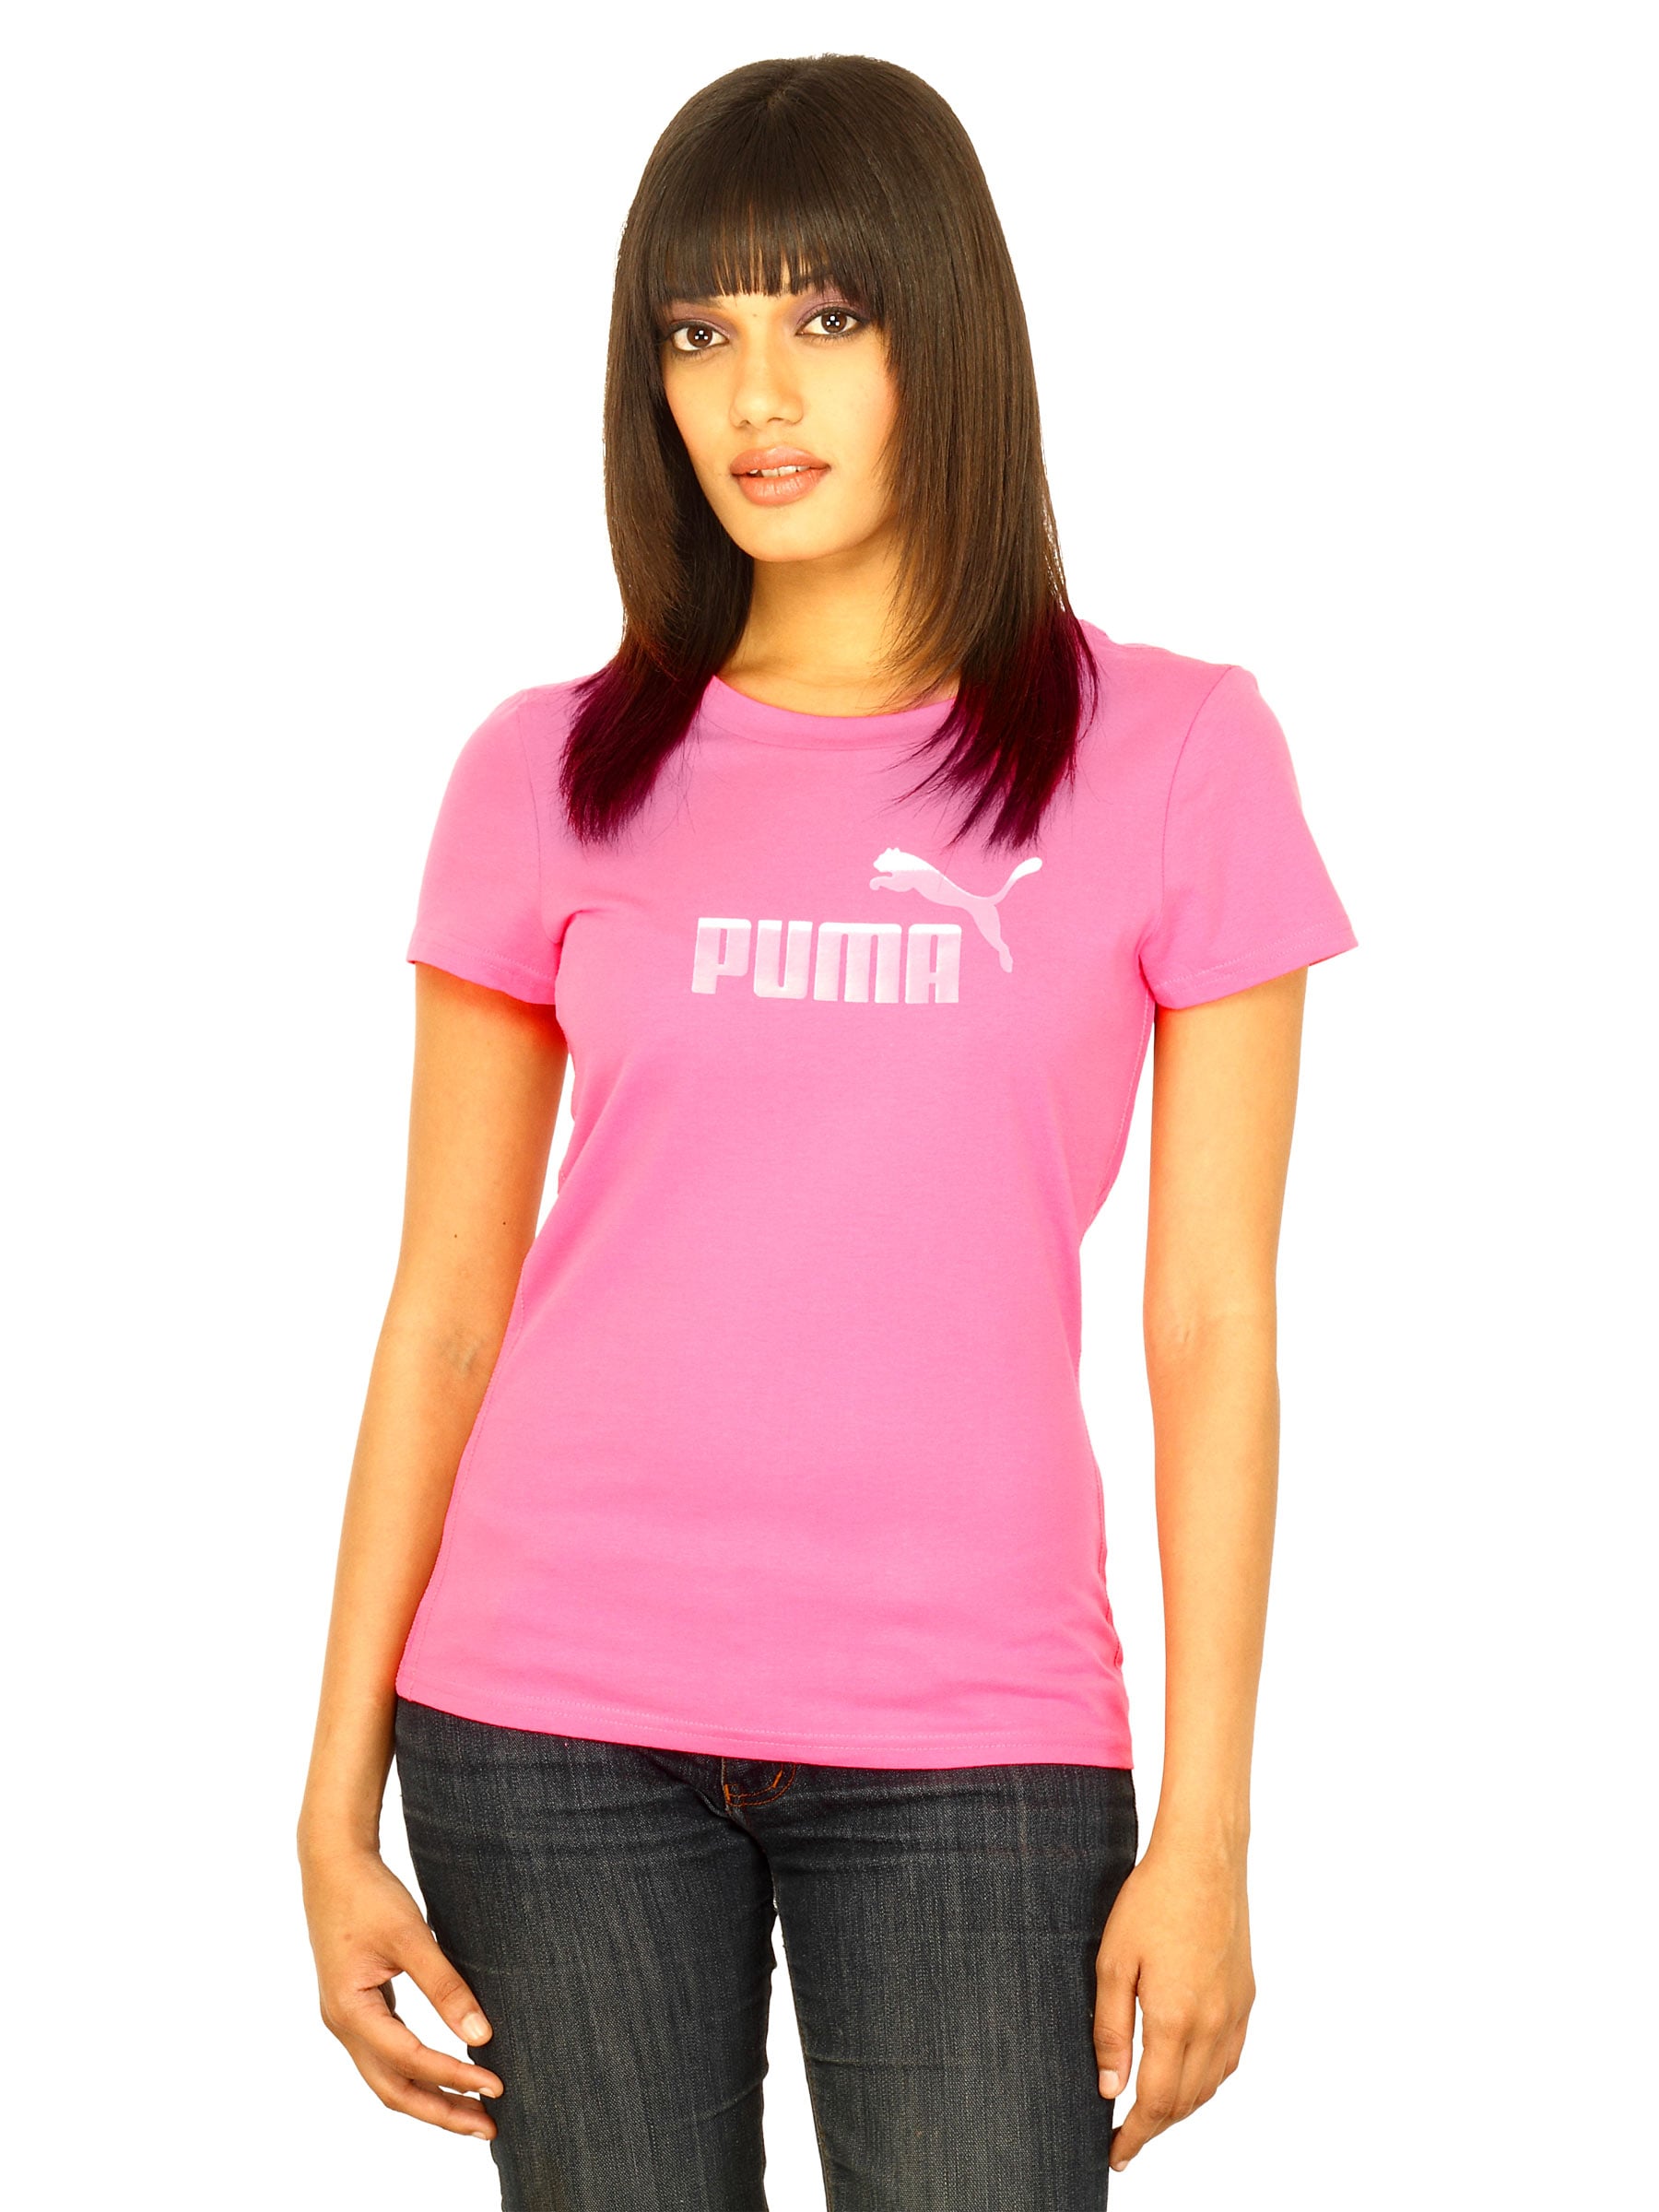 Puma Women Large logo tee Pink Tshirts